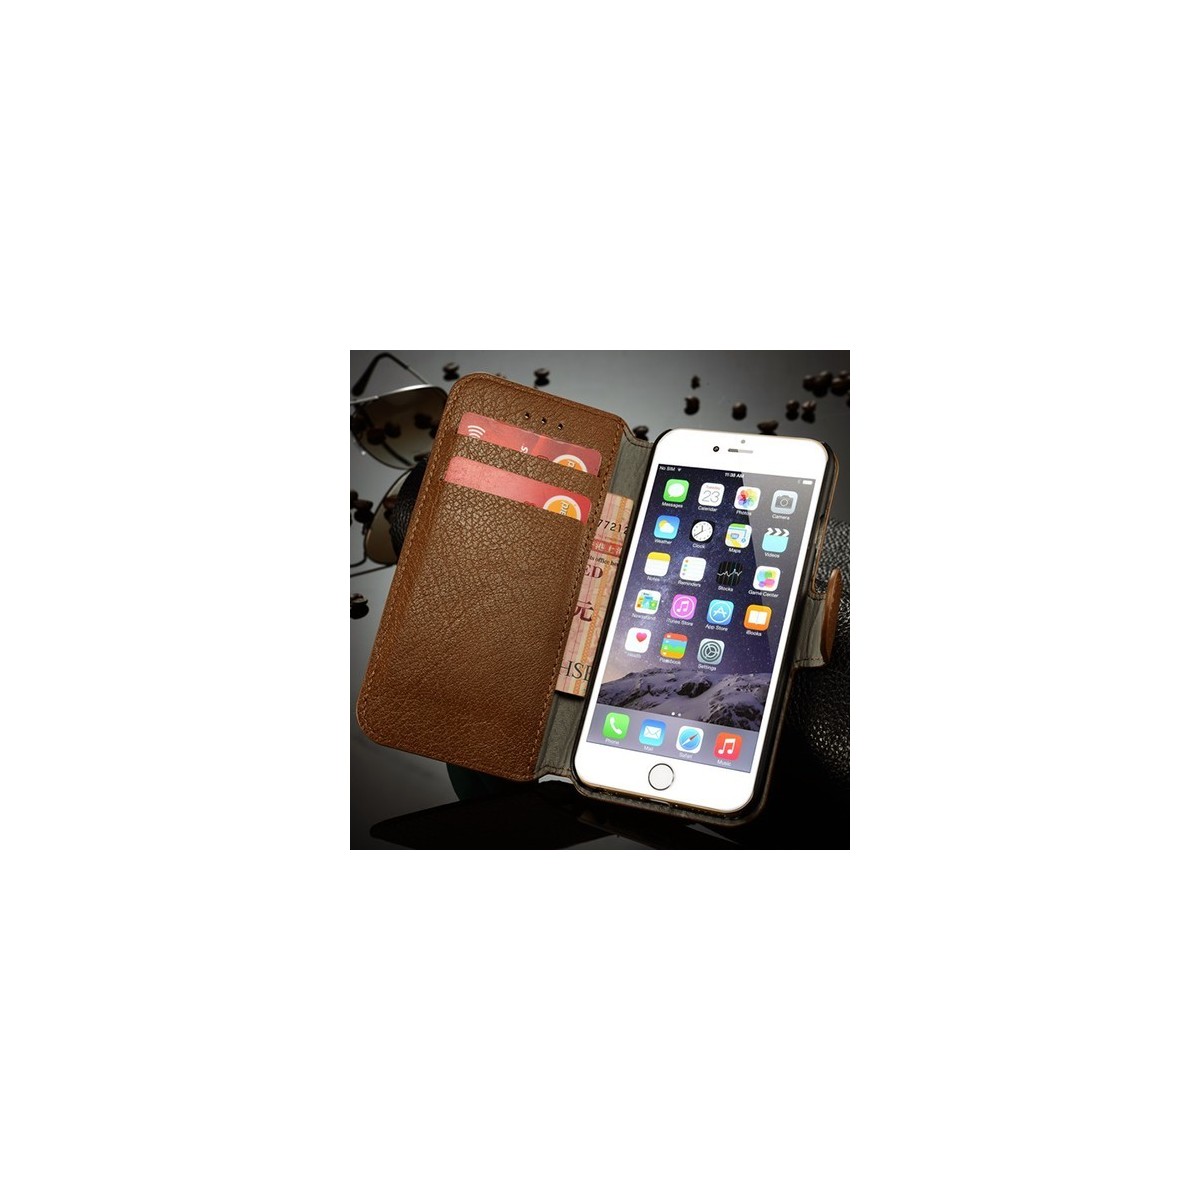 Etui Book type marron foncé pour iPhone 6 / 6s - CaseMe